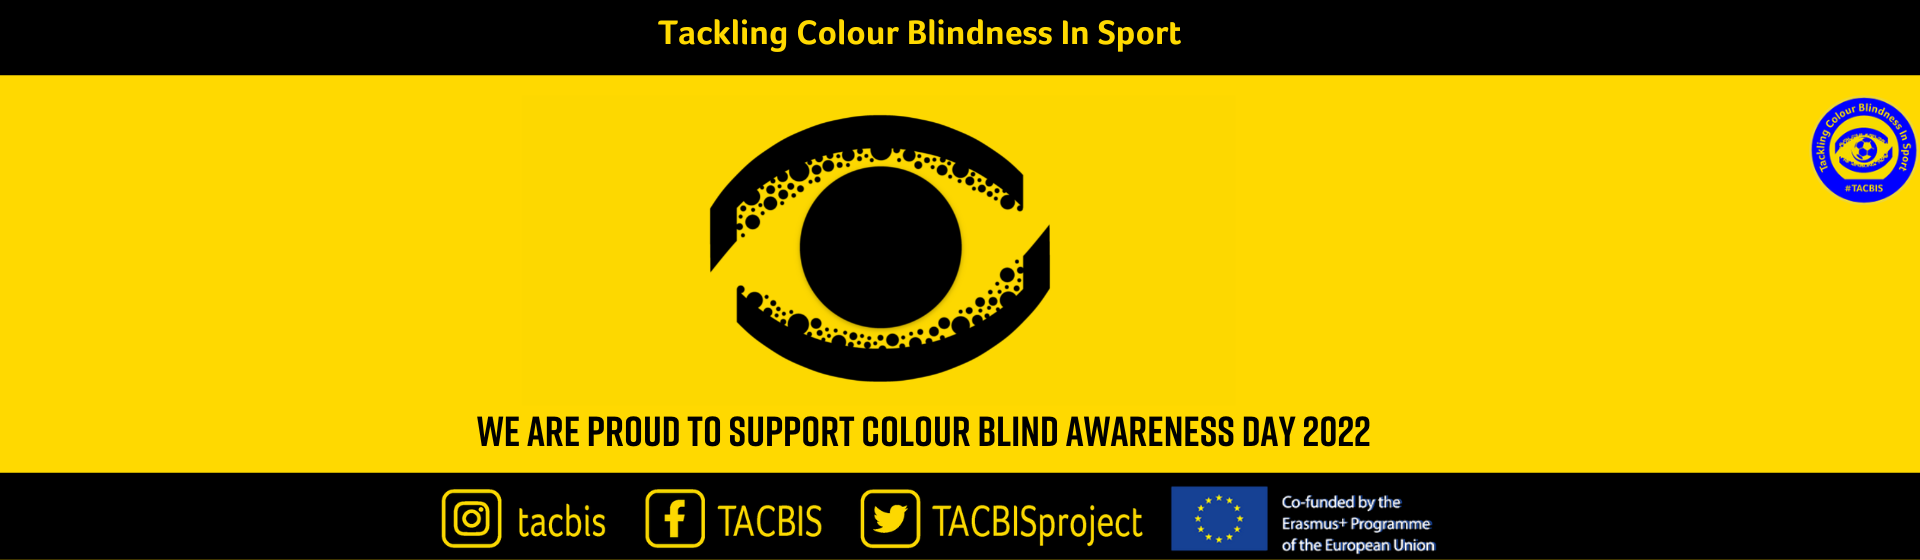 Colour Blind Awareness Day 2022 header